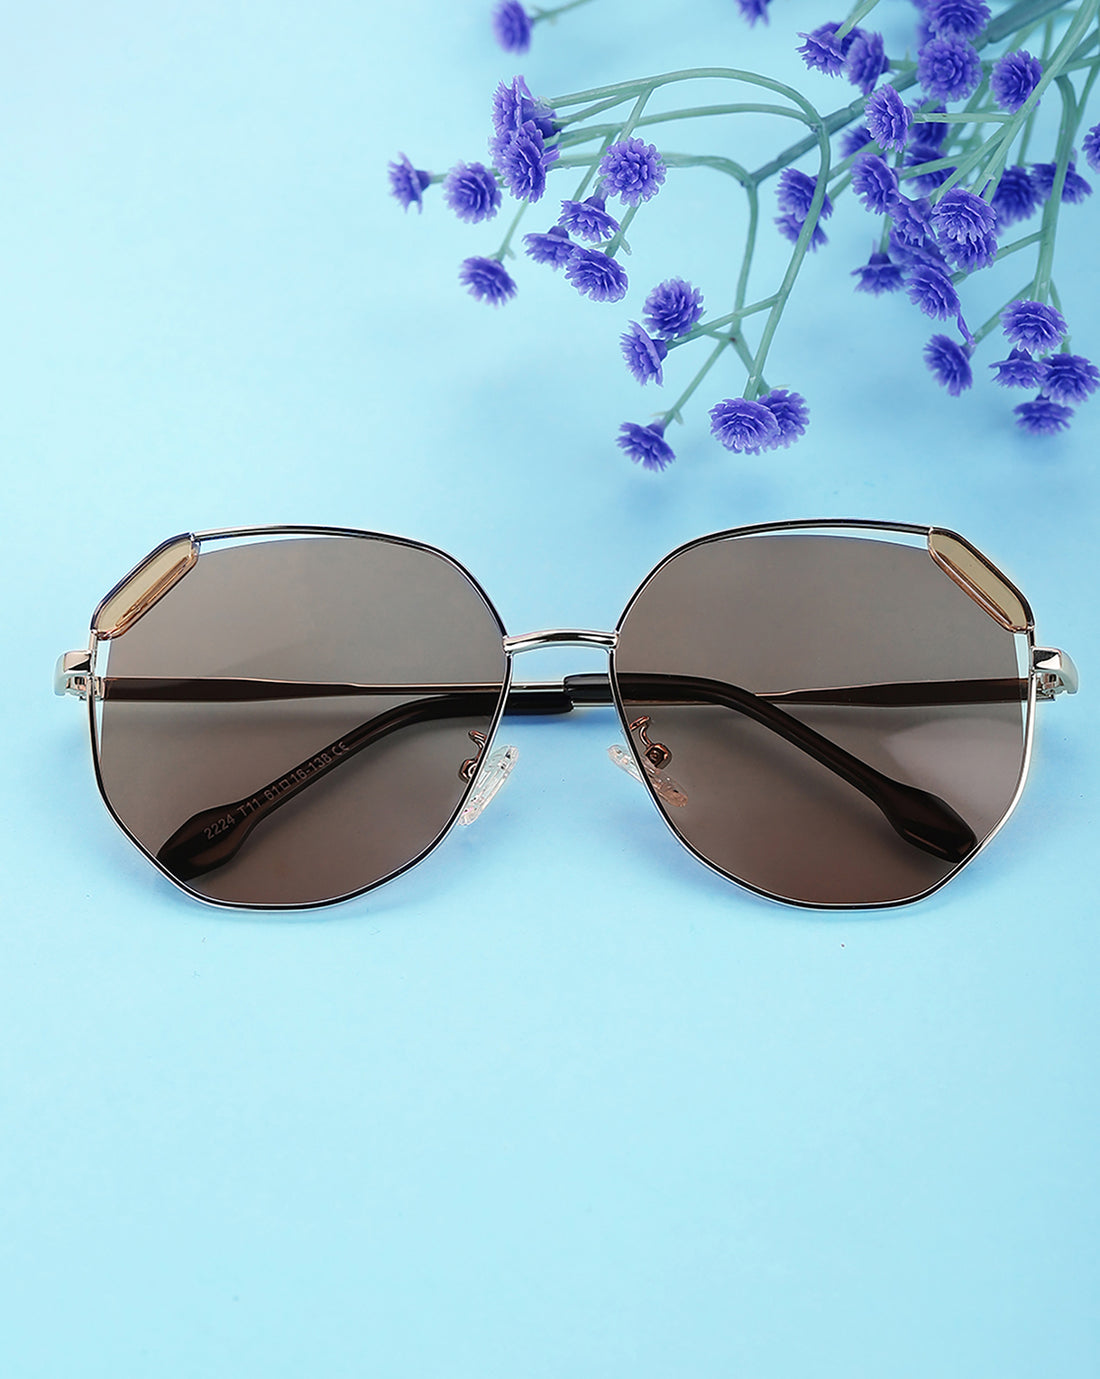 Carlton London Unique/Distinctive Sunglasses With Uv Protected Lens For Women